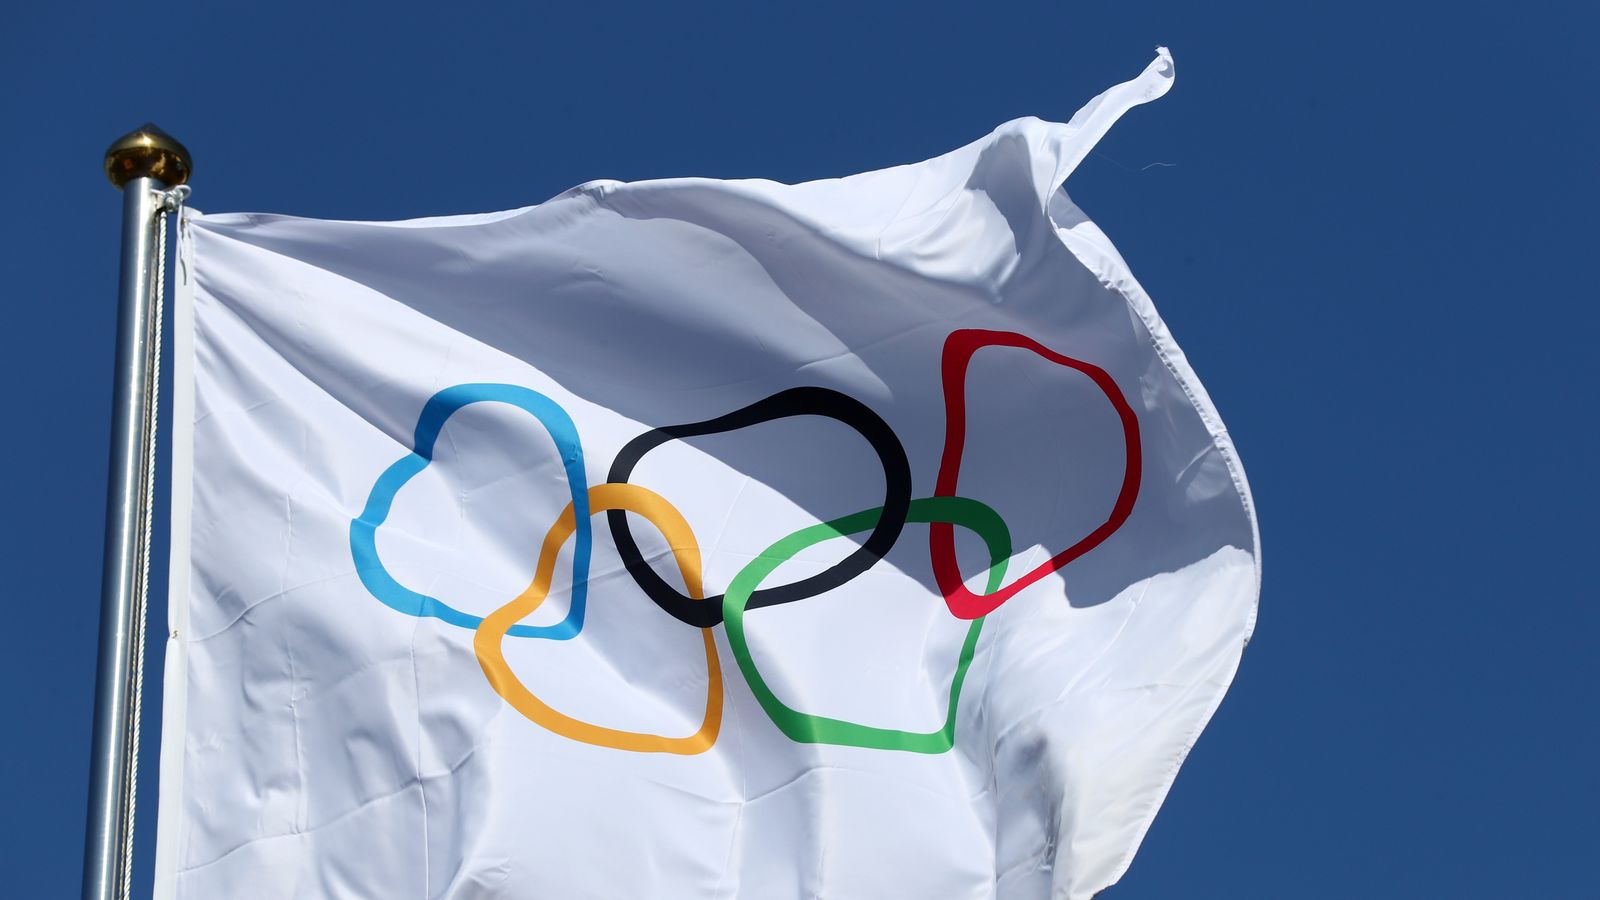 IOC adds seven new events to 2022 Beijing Winter Olympics schedule